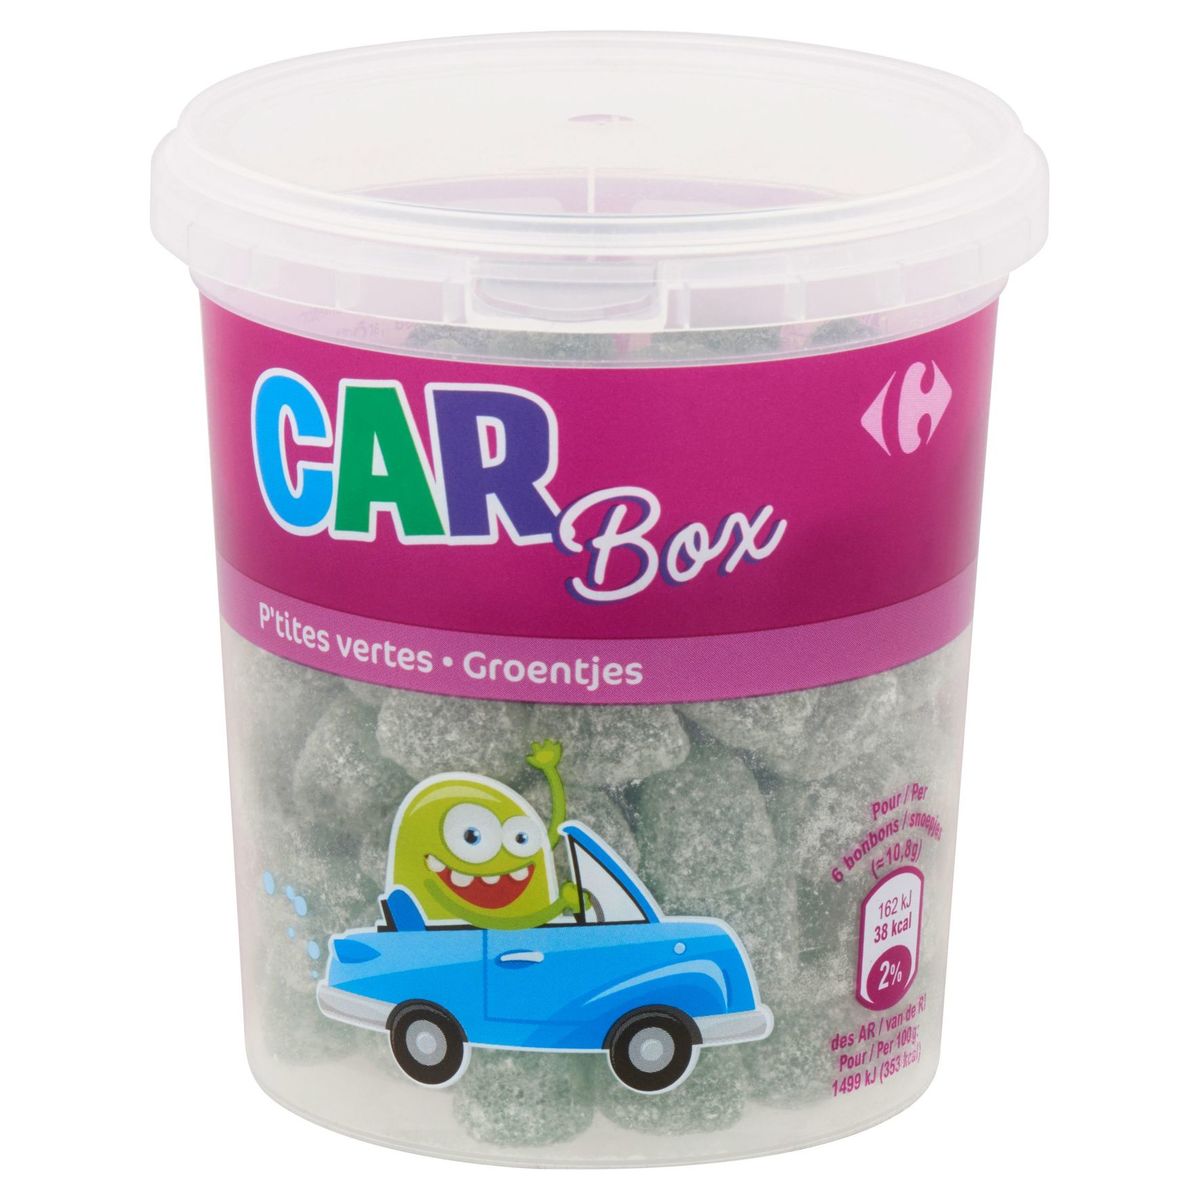 Carrefour Car Box P'tites Vertes 220 g